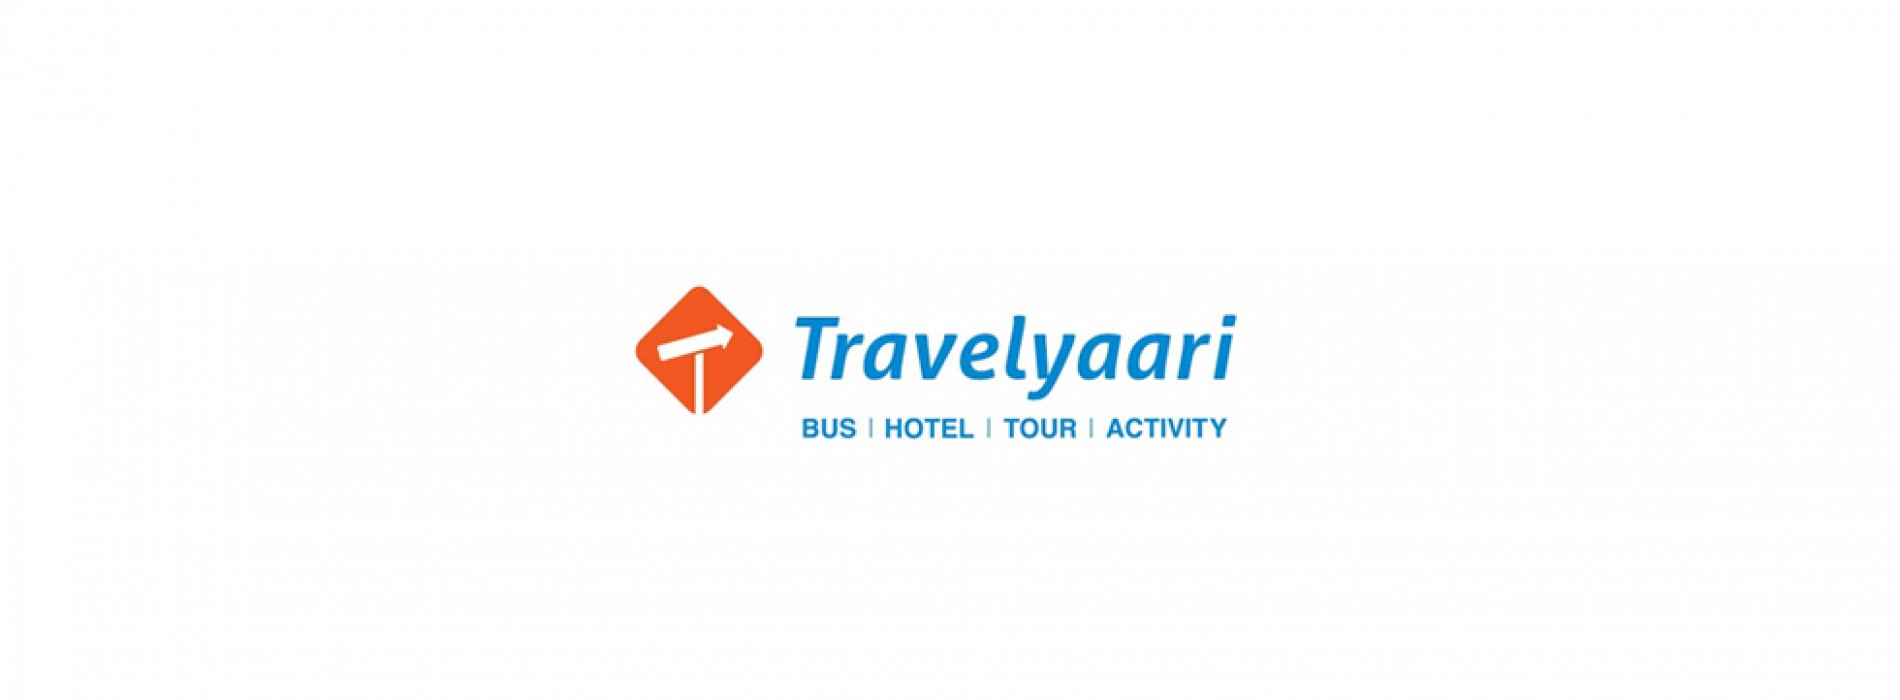 Leading online bus booking platform Travelyaari raises $7 million in Series B funding